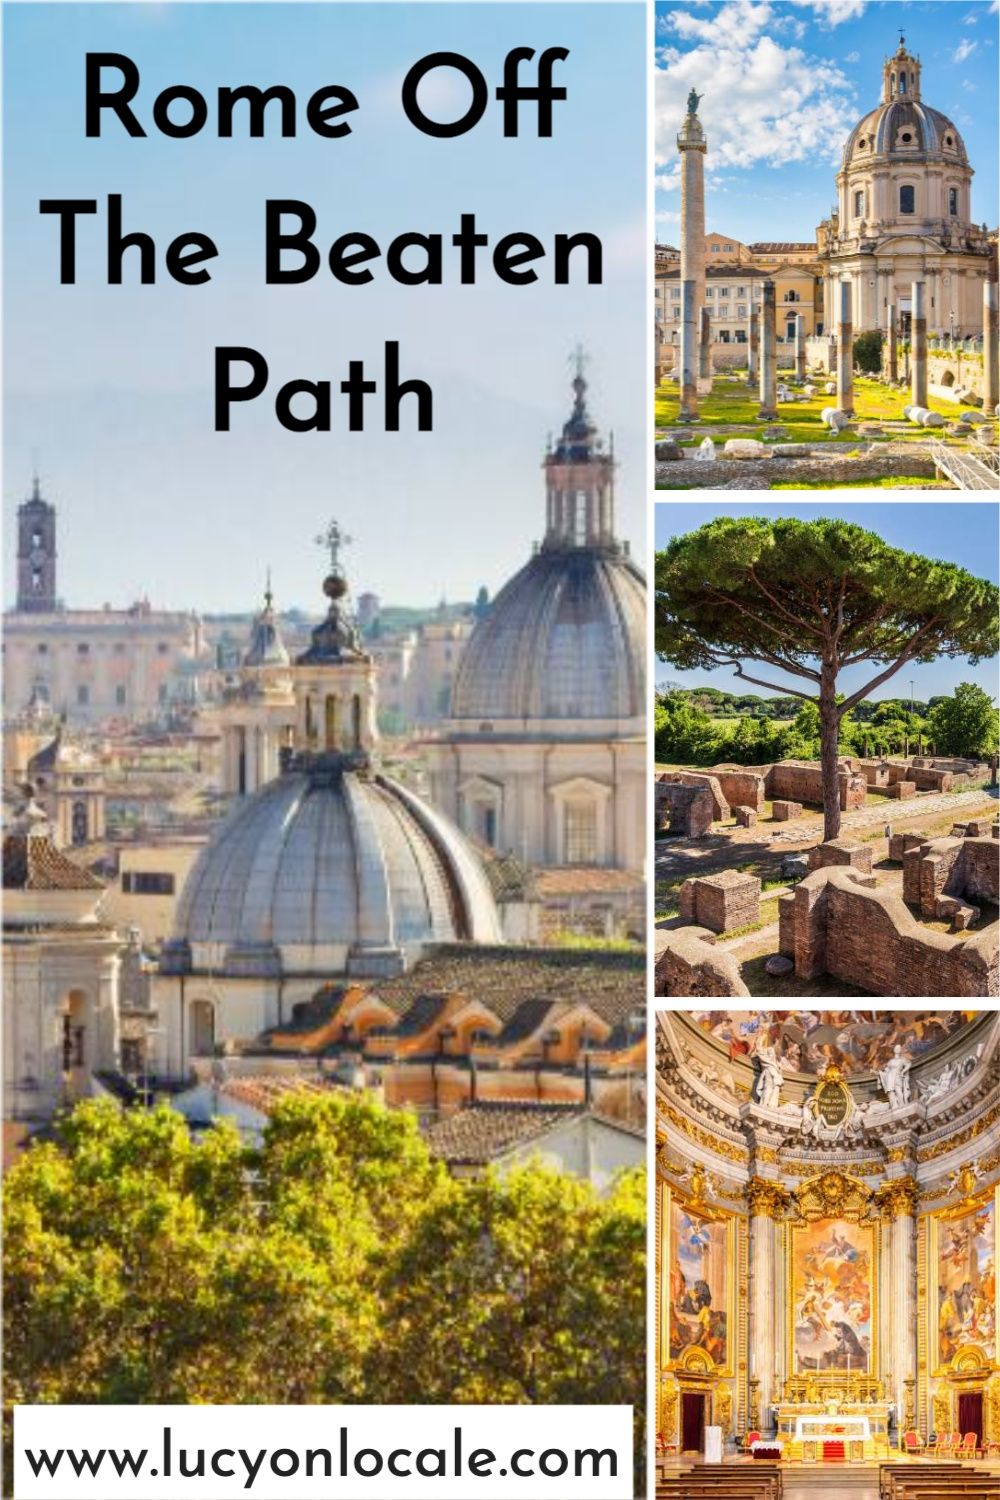 Rome off the beaten path